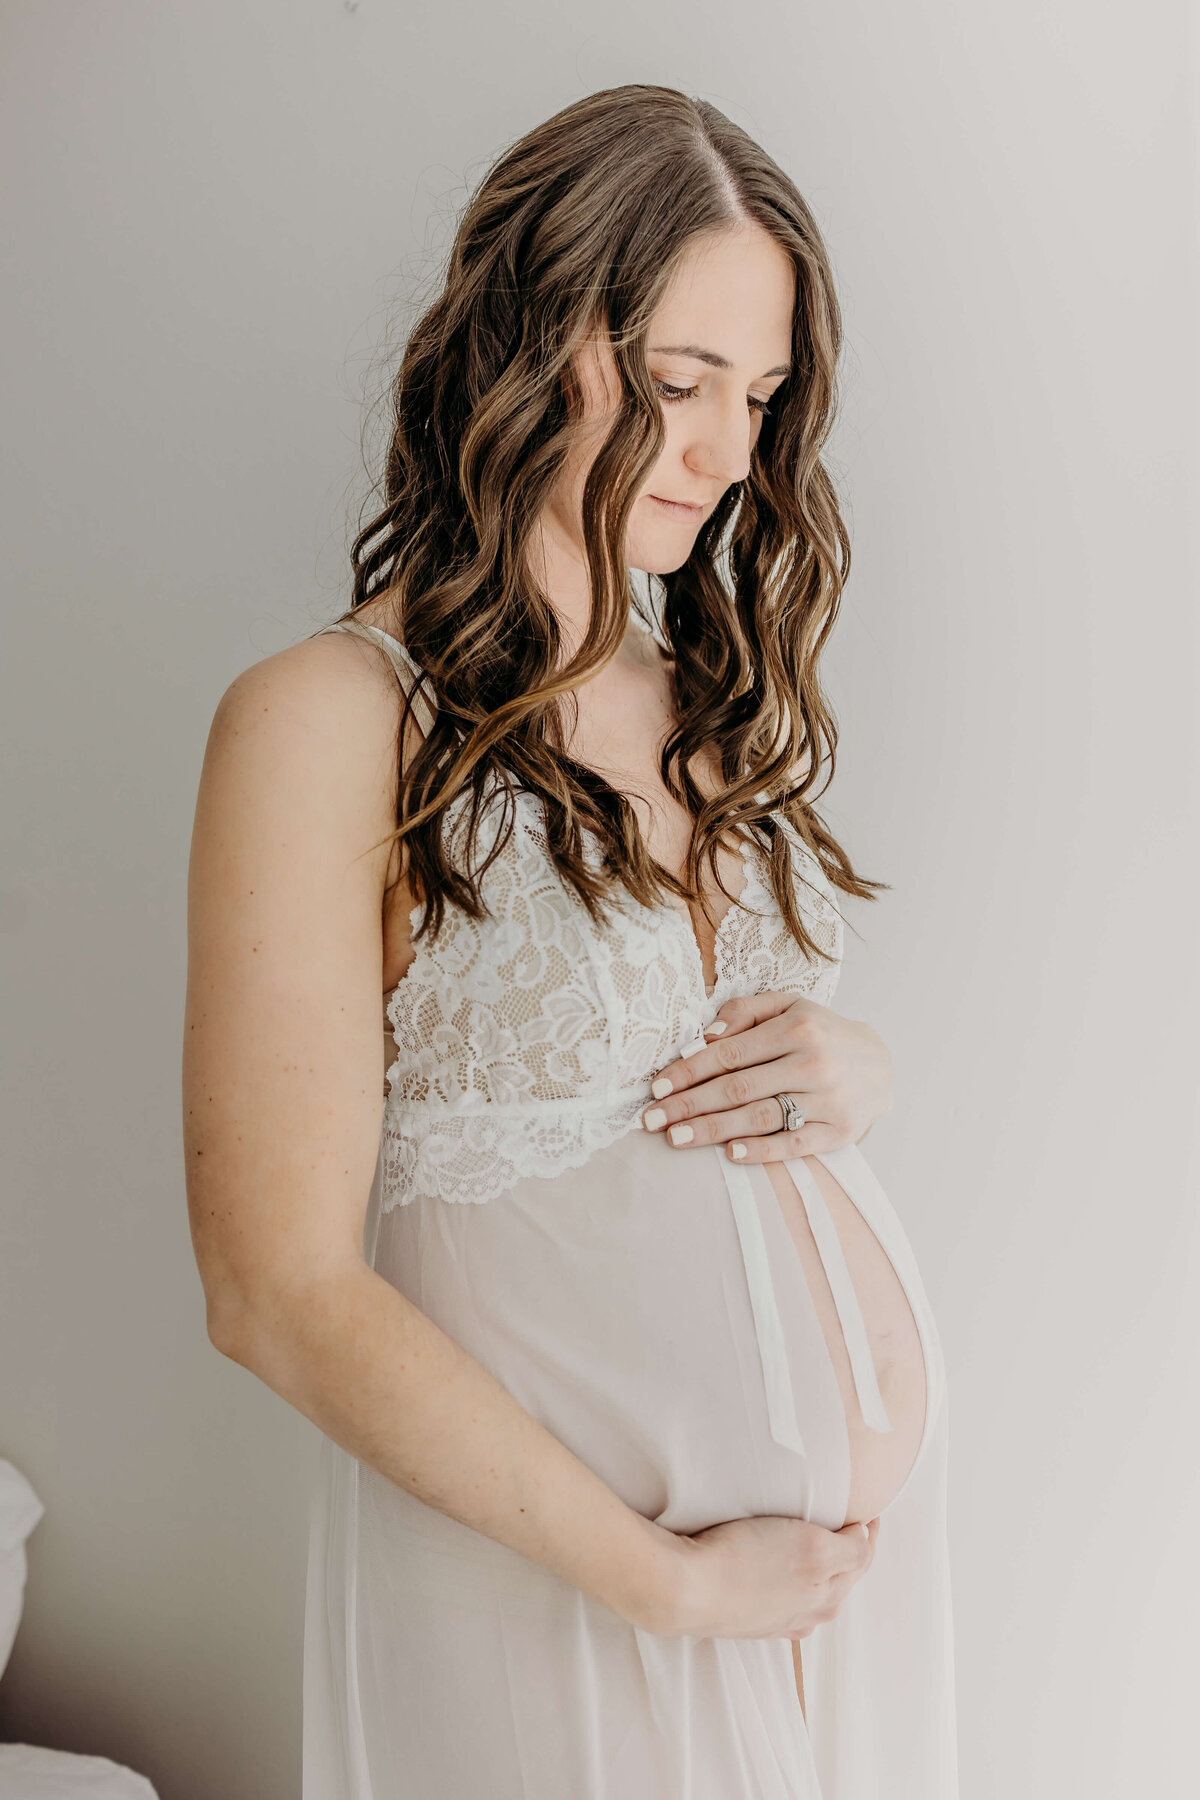 Pregnant mom holding belly in white robe